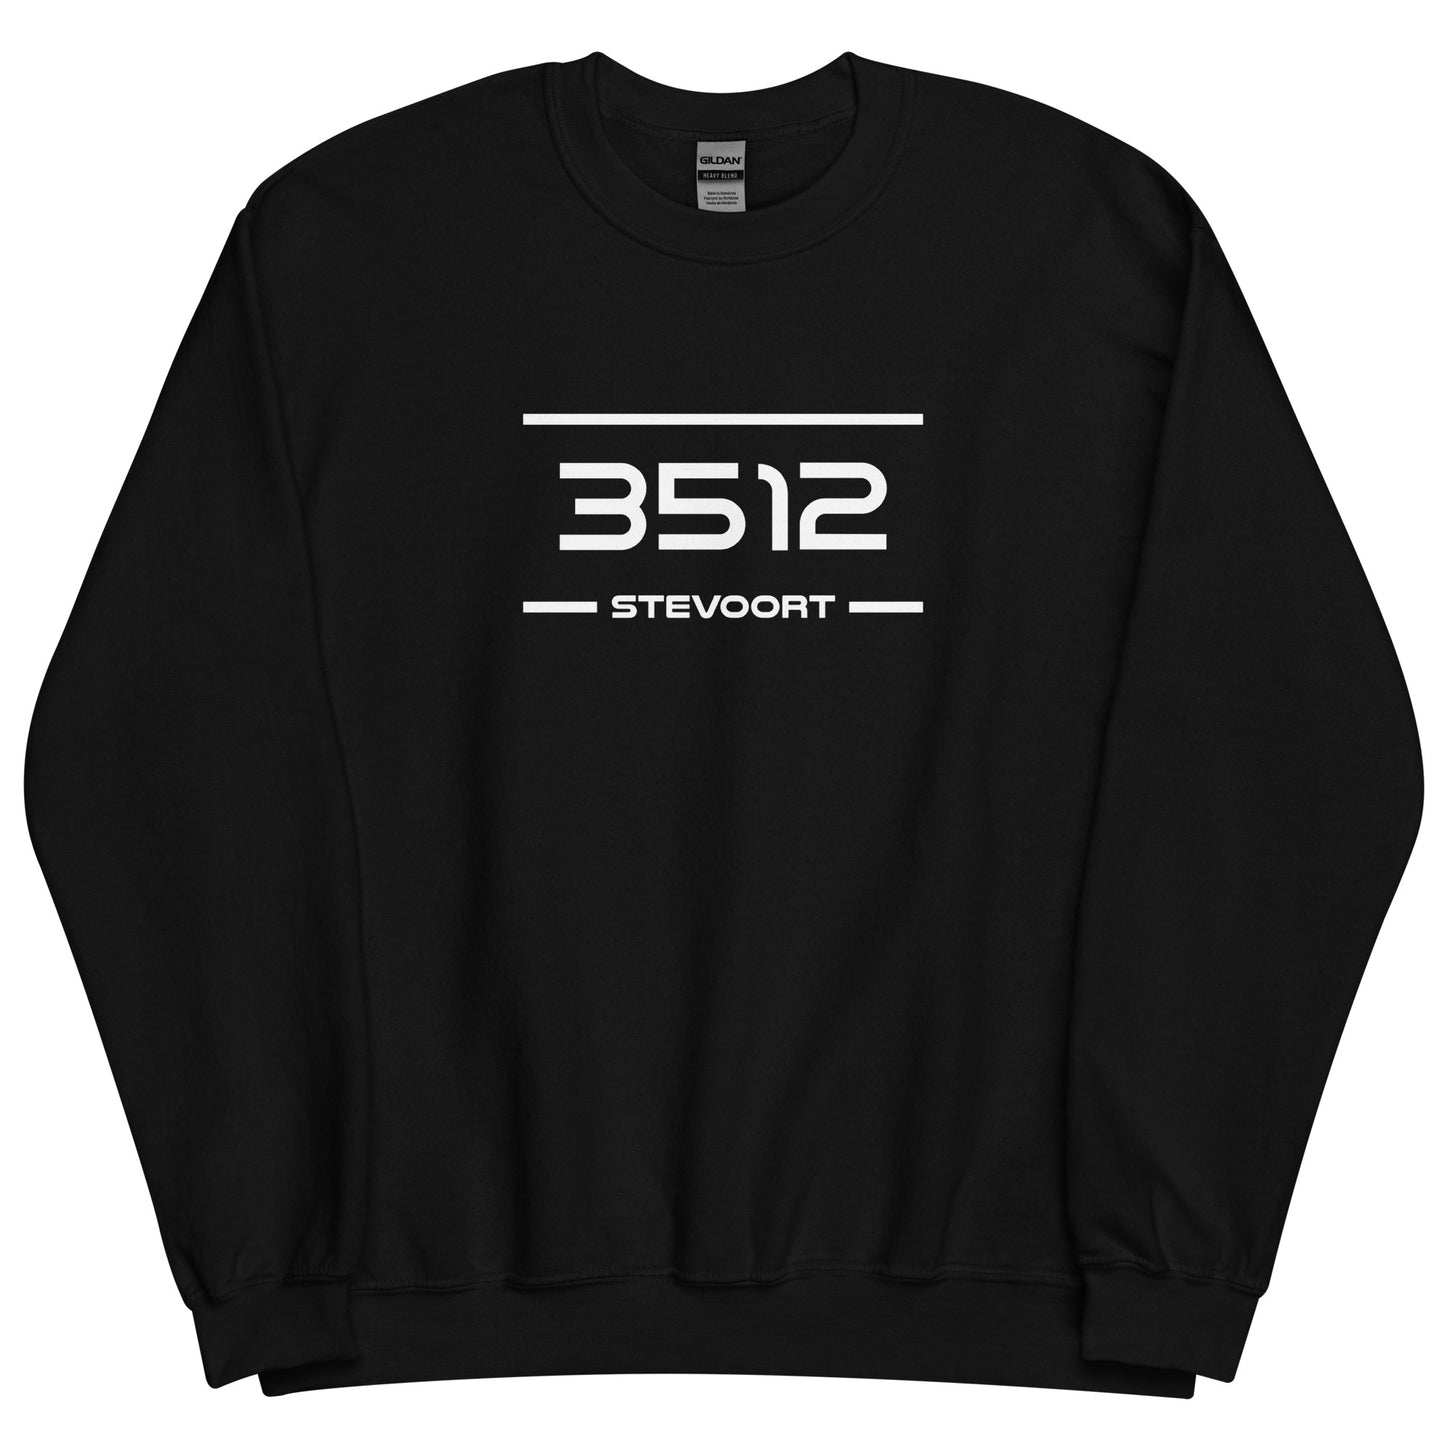 Sweater - 3512 - Stevoort (M/V)